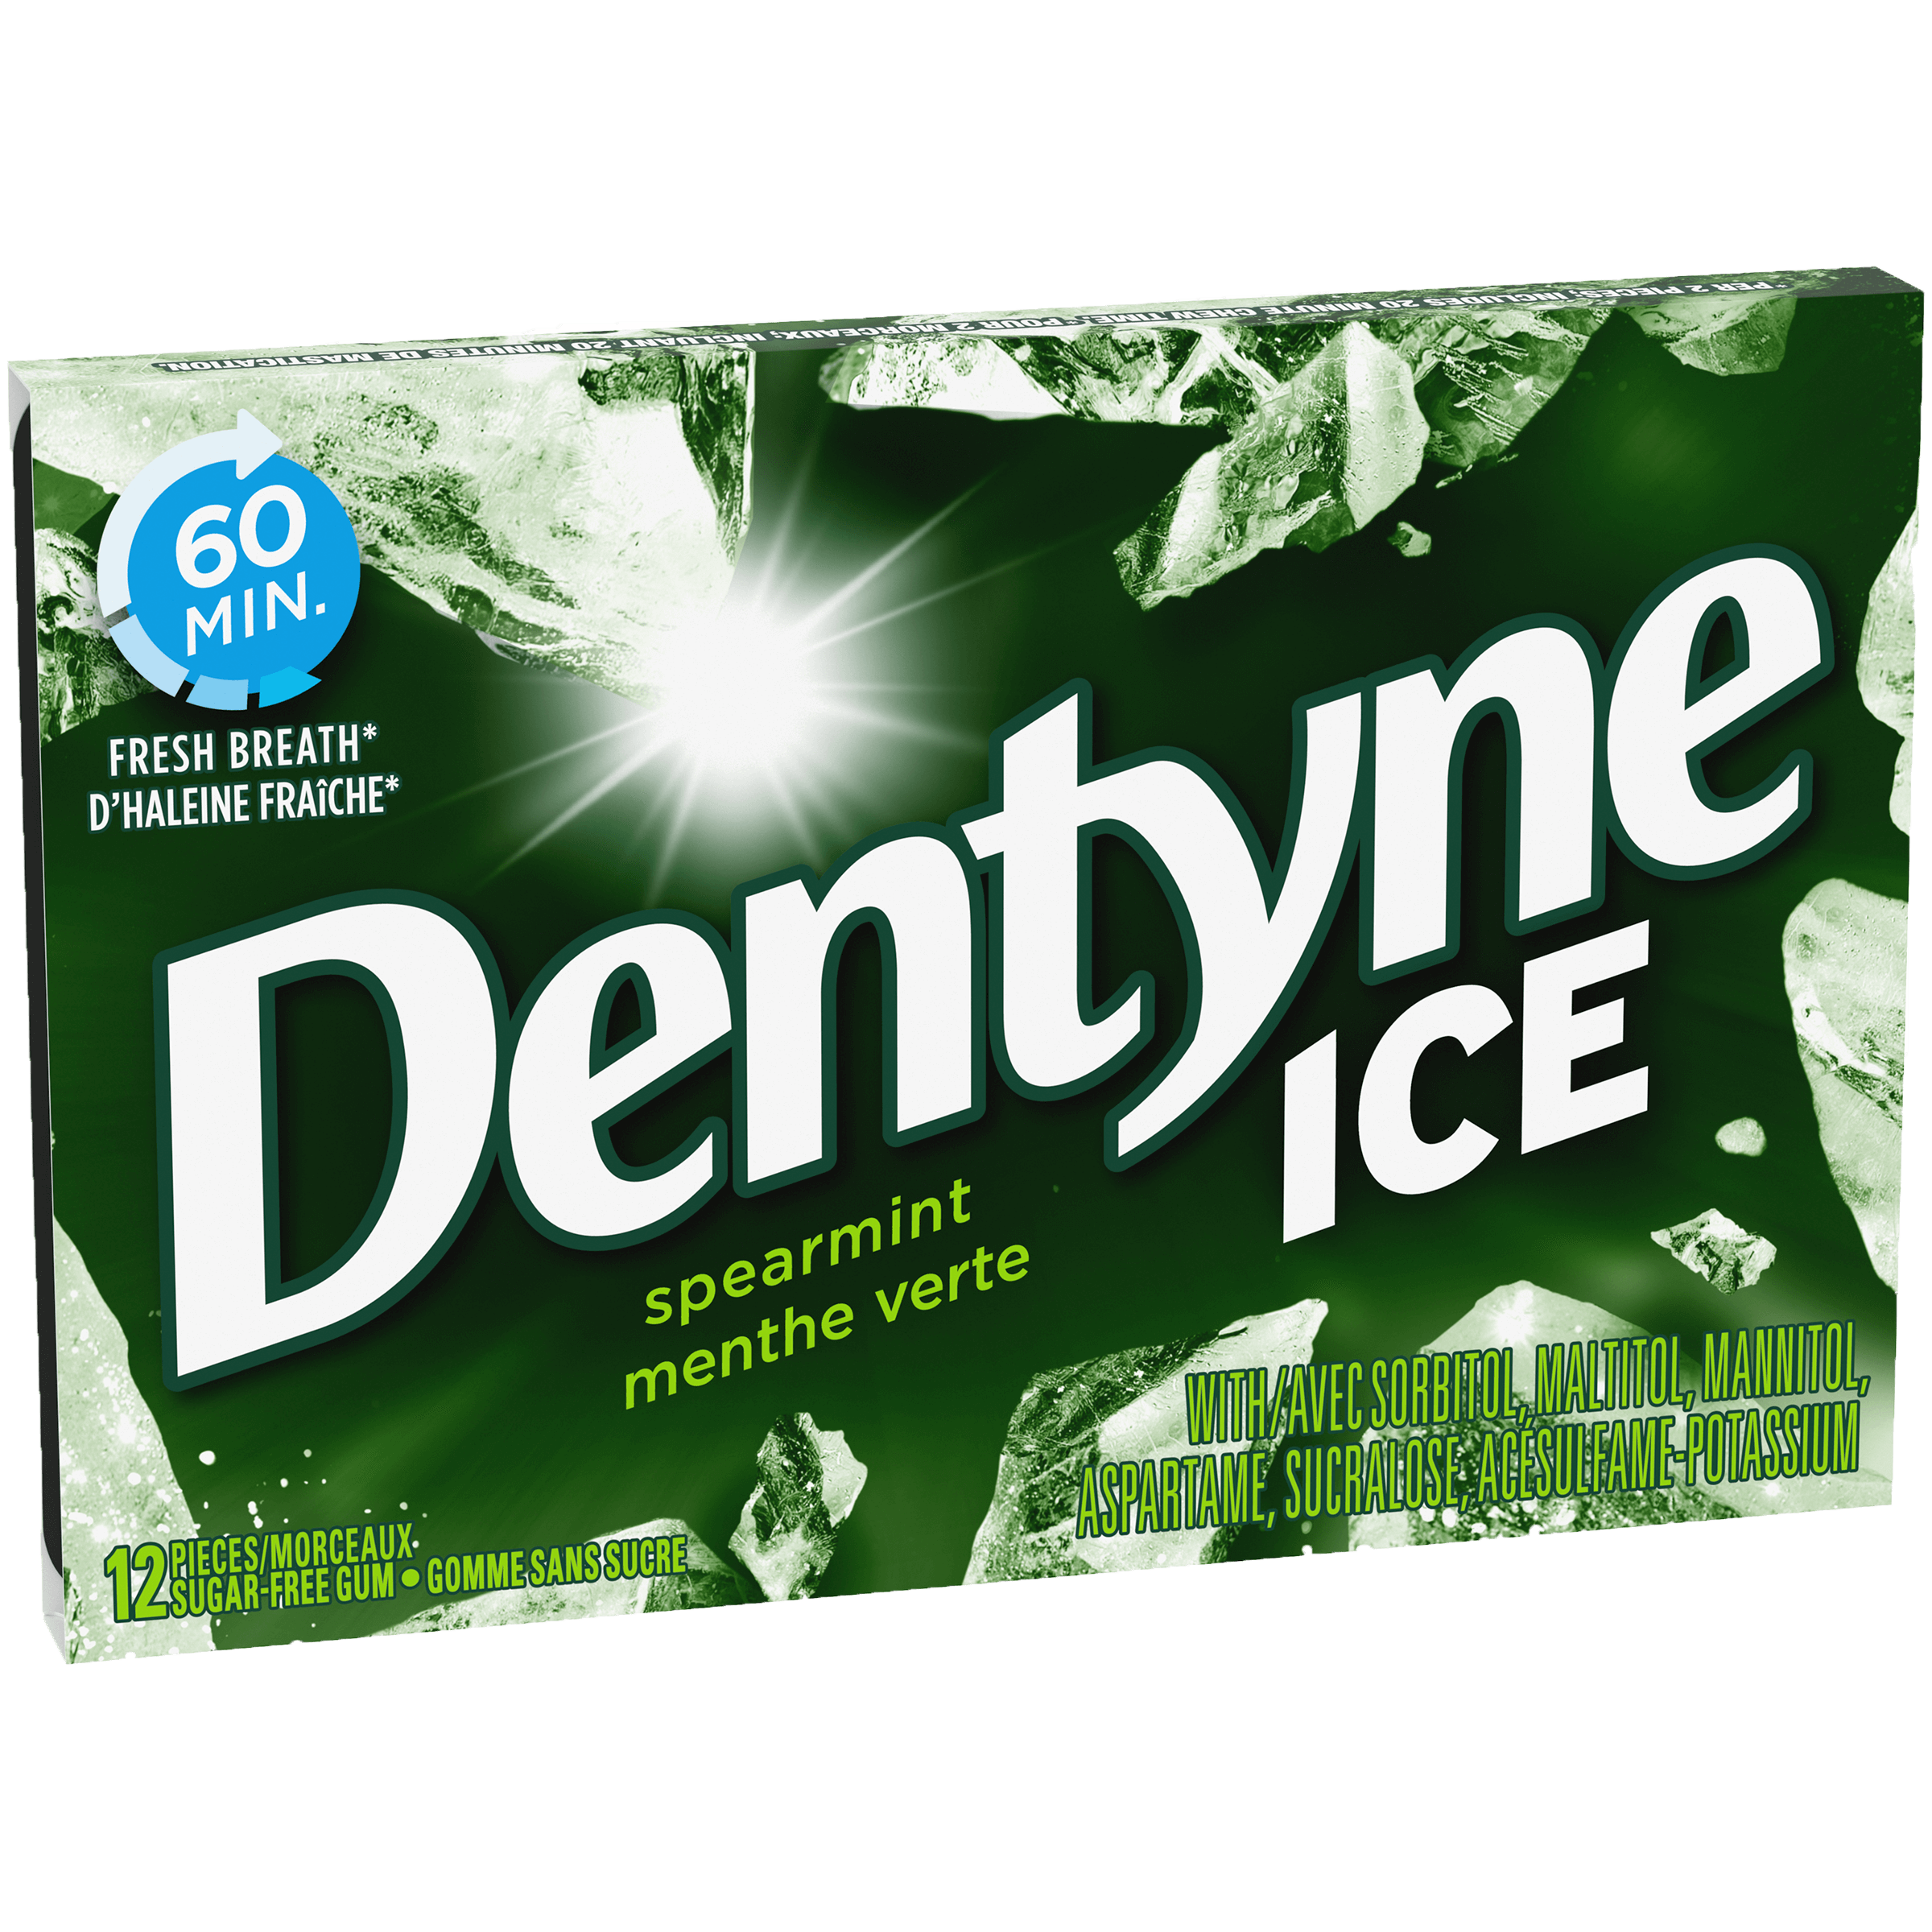 Dentyne ICE Spearmint